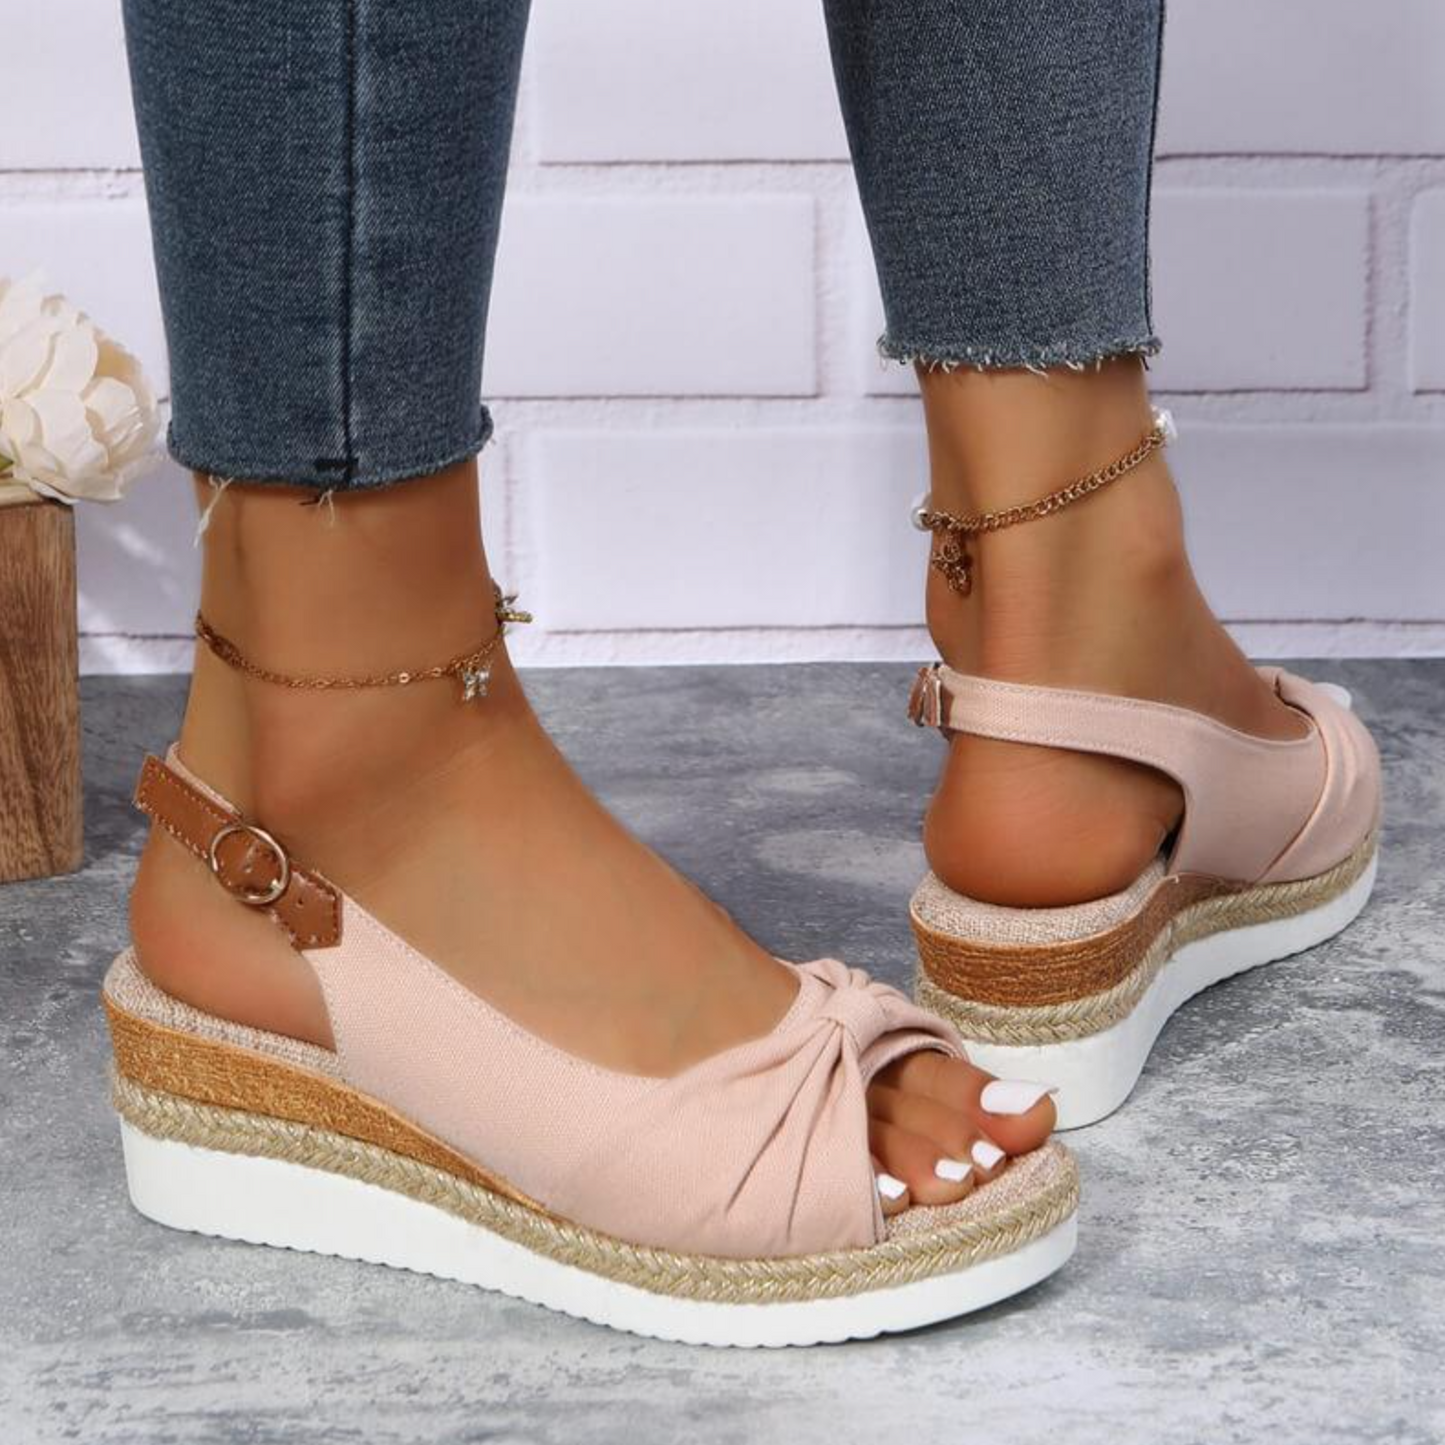 2022 Women's Buckle Peep Toe Wedges Sandals, Comfortable Lightweight Wear-resistant Shoes